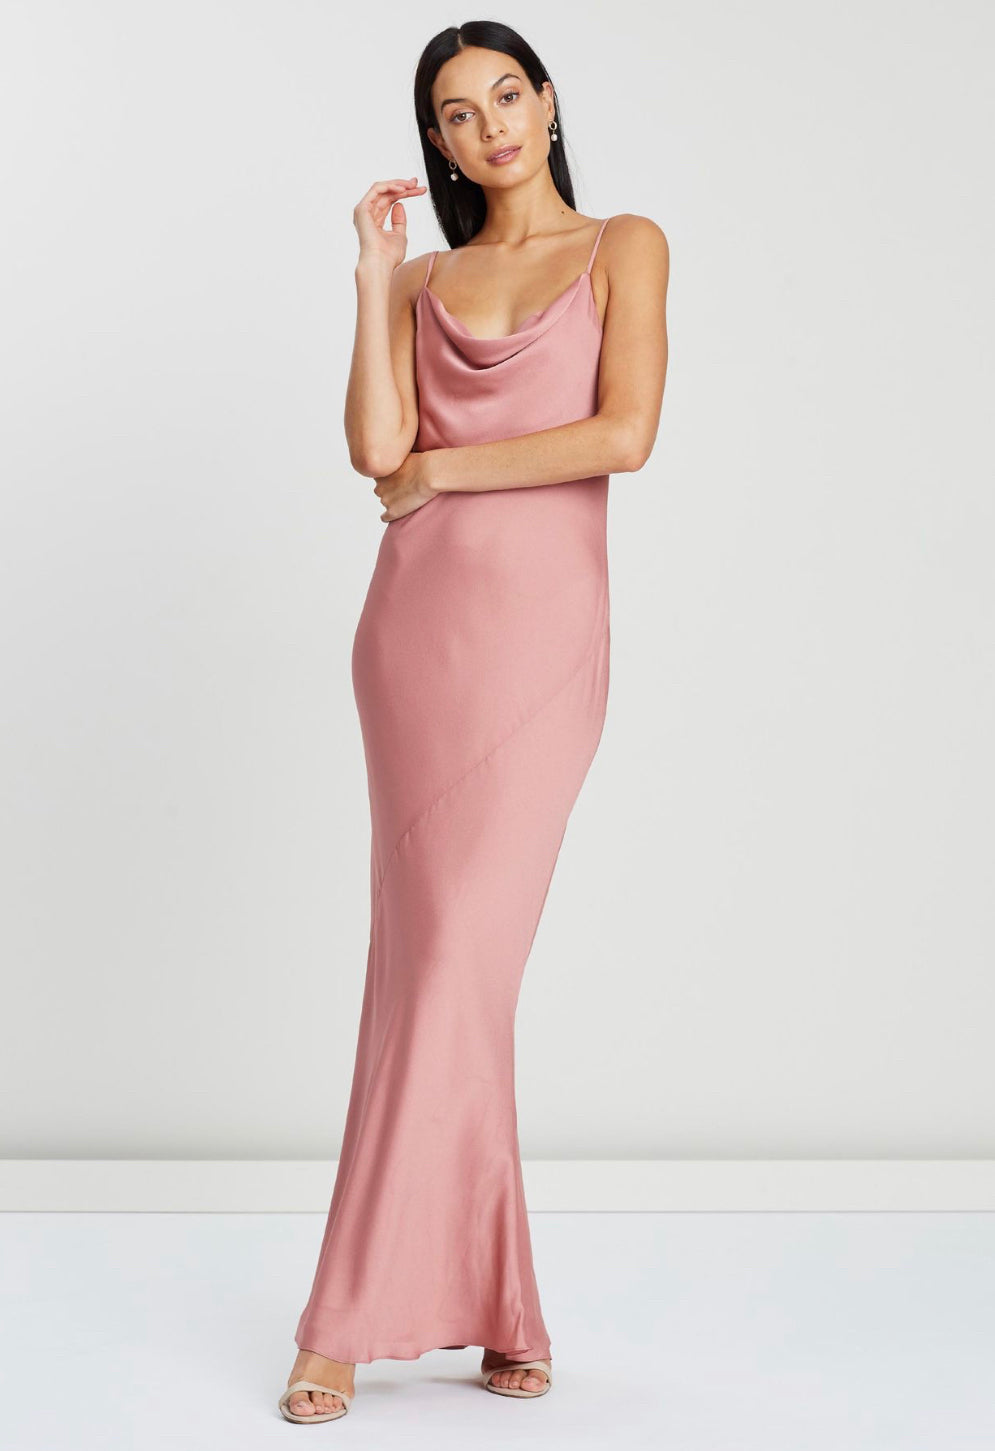 Shona Joy Luxe Bias Cowl Slip Dress in rose front view